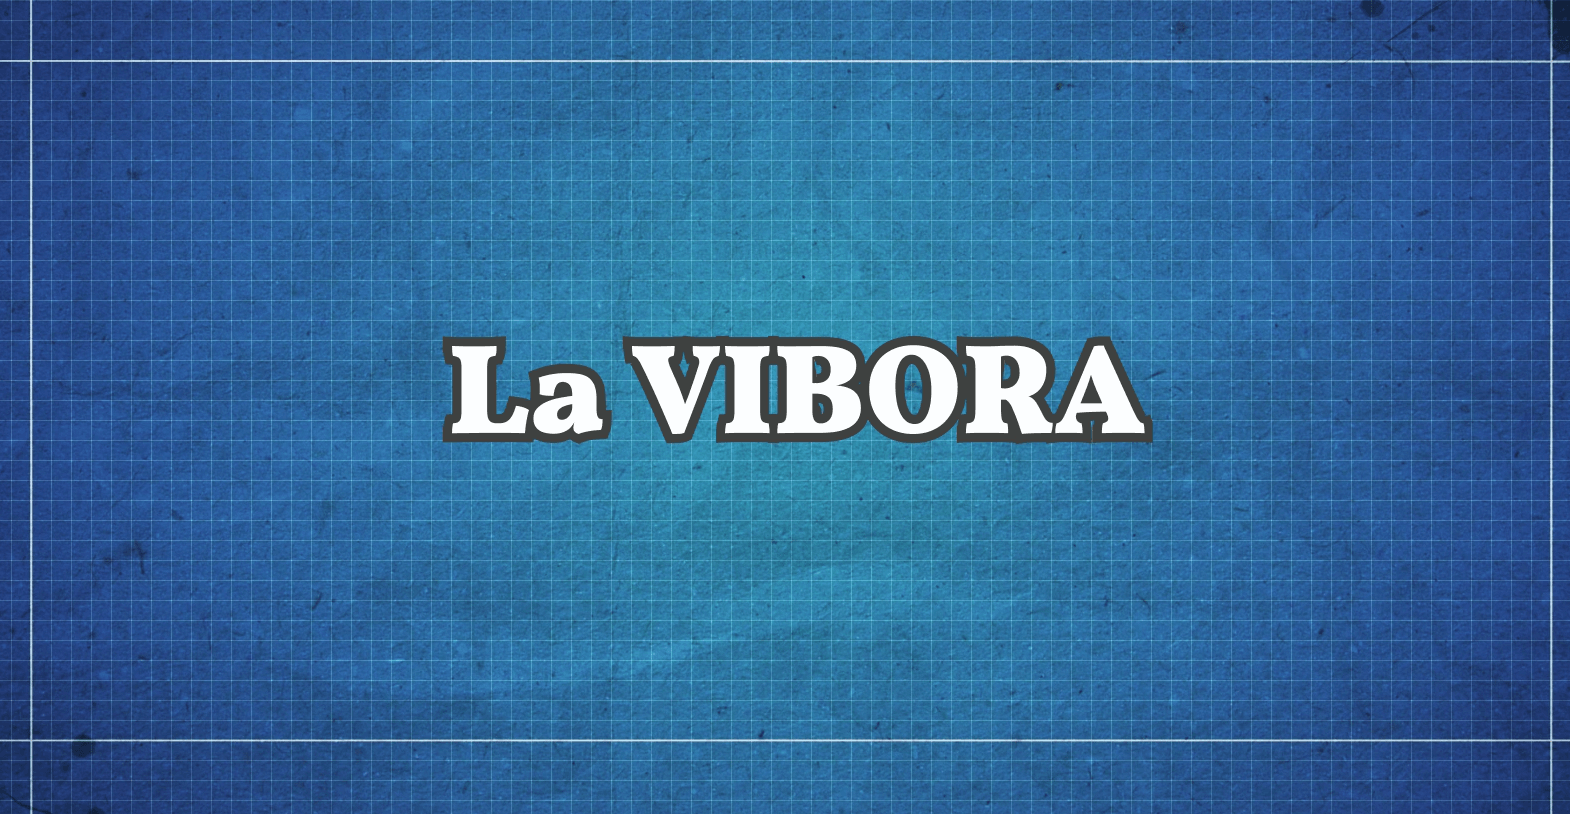 La VIBORA : A type of technical smash